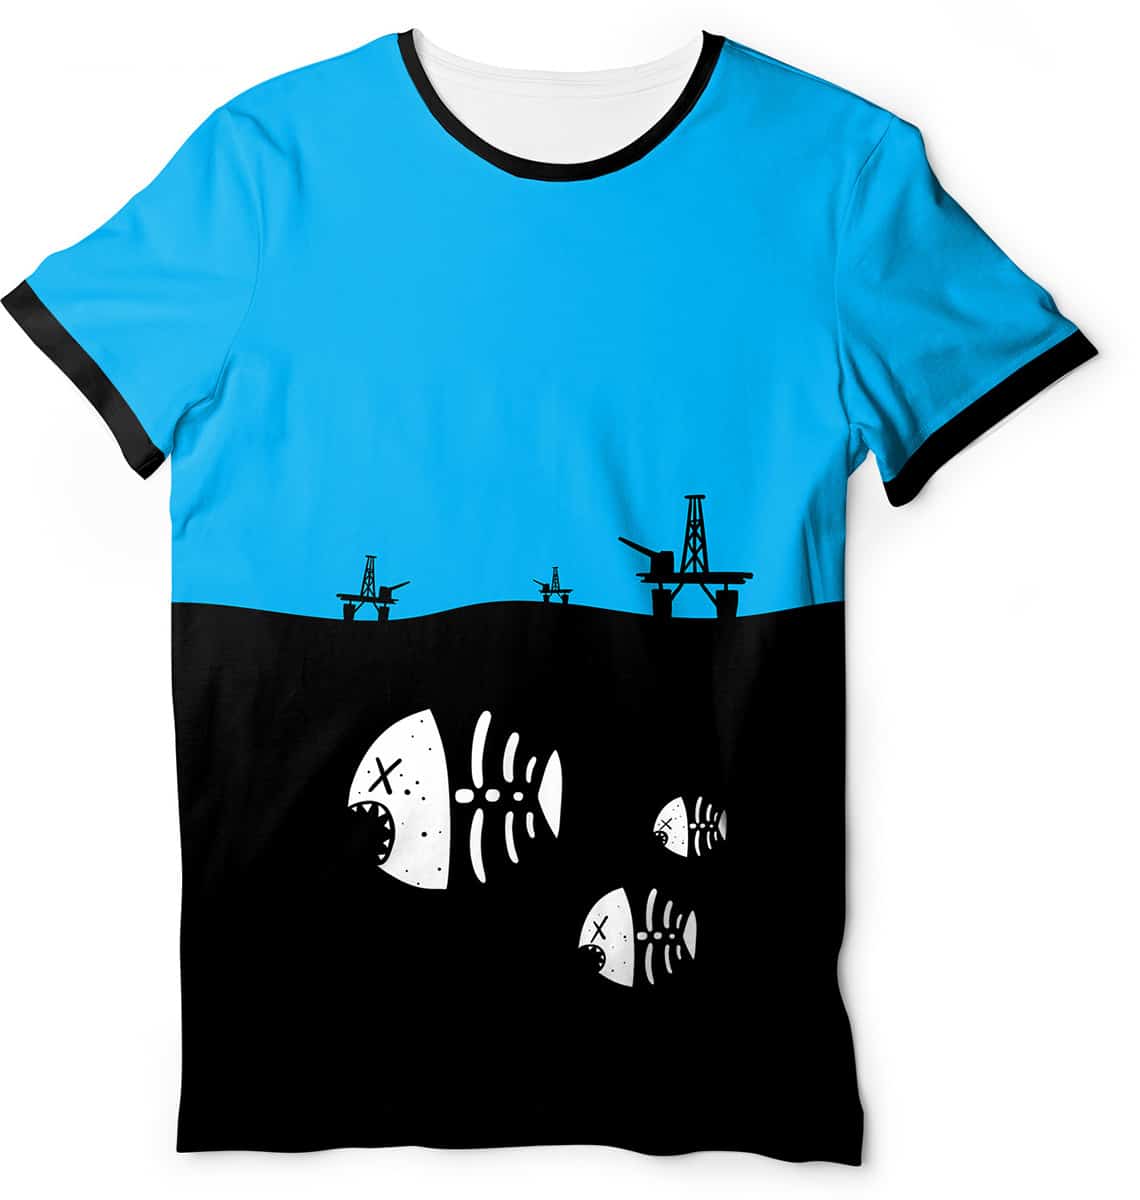 Fish Skeleton Oil Rig Environmental T-Shirt - Men's Short Sleeve (Size: L, Color: White)